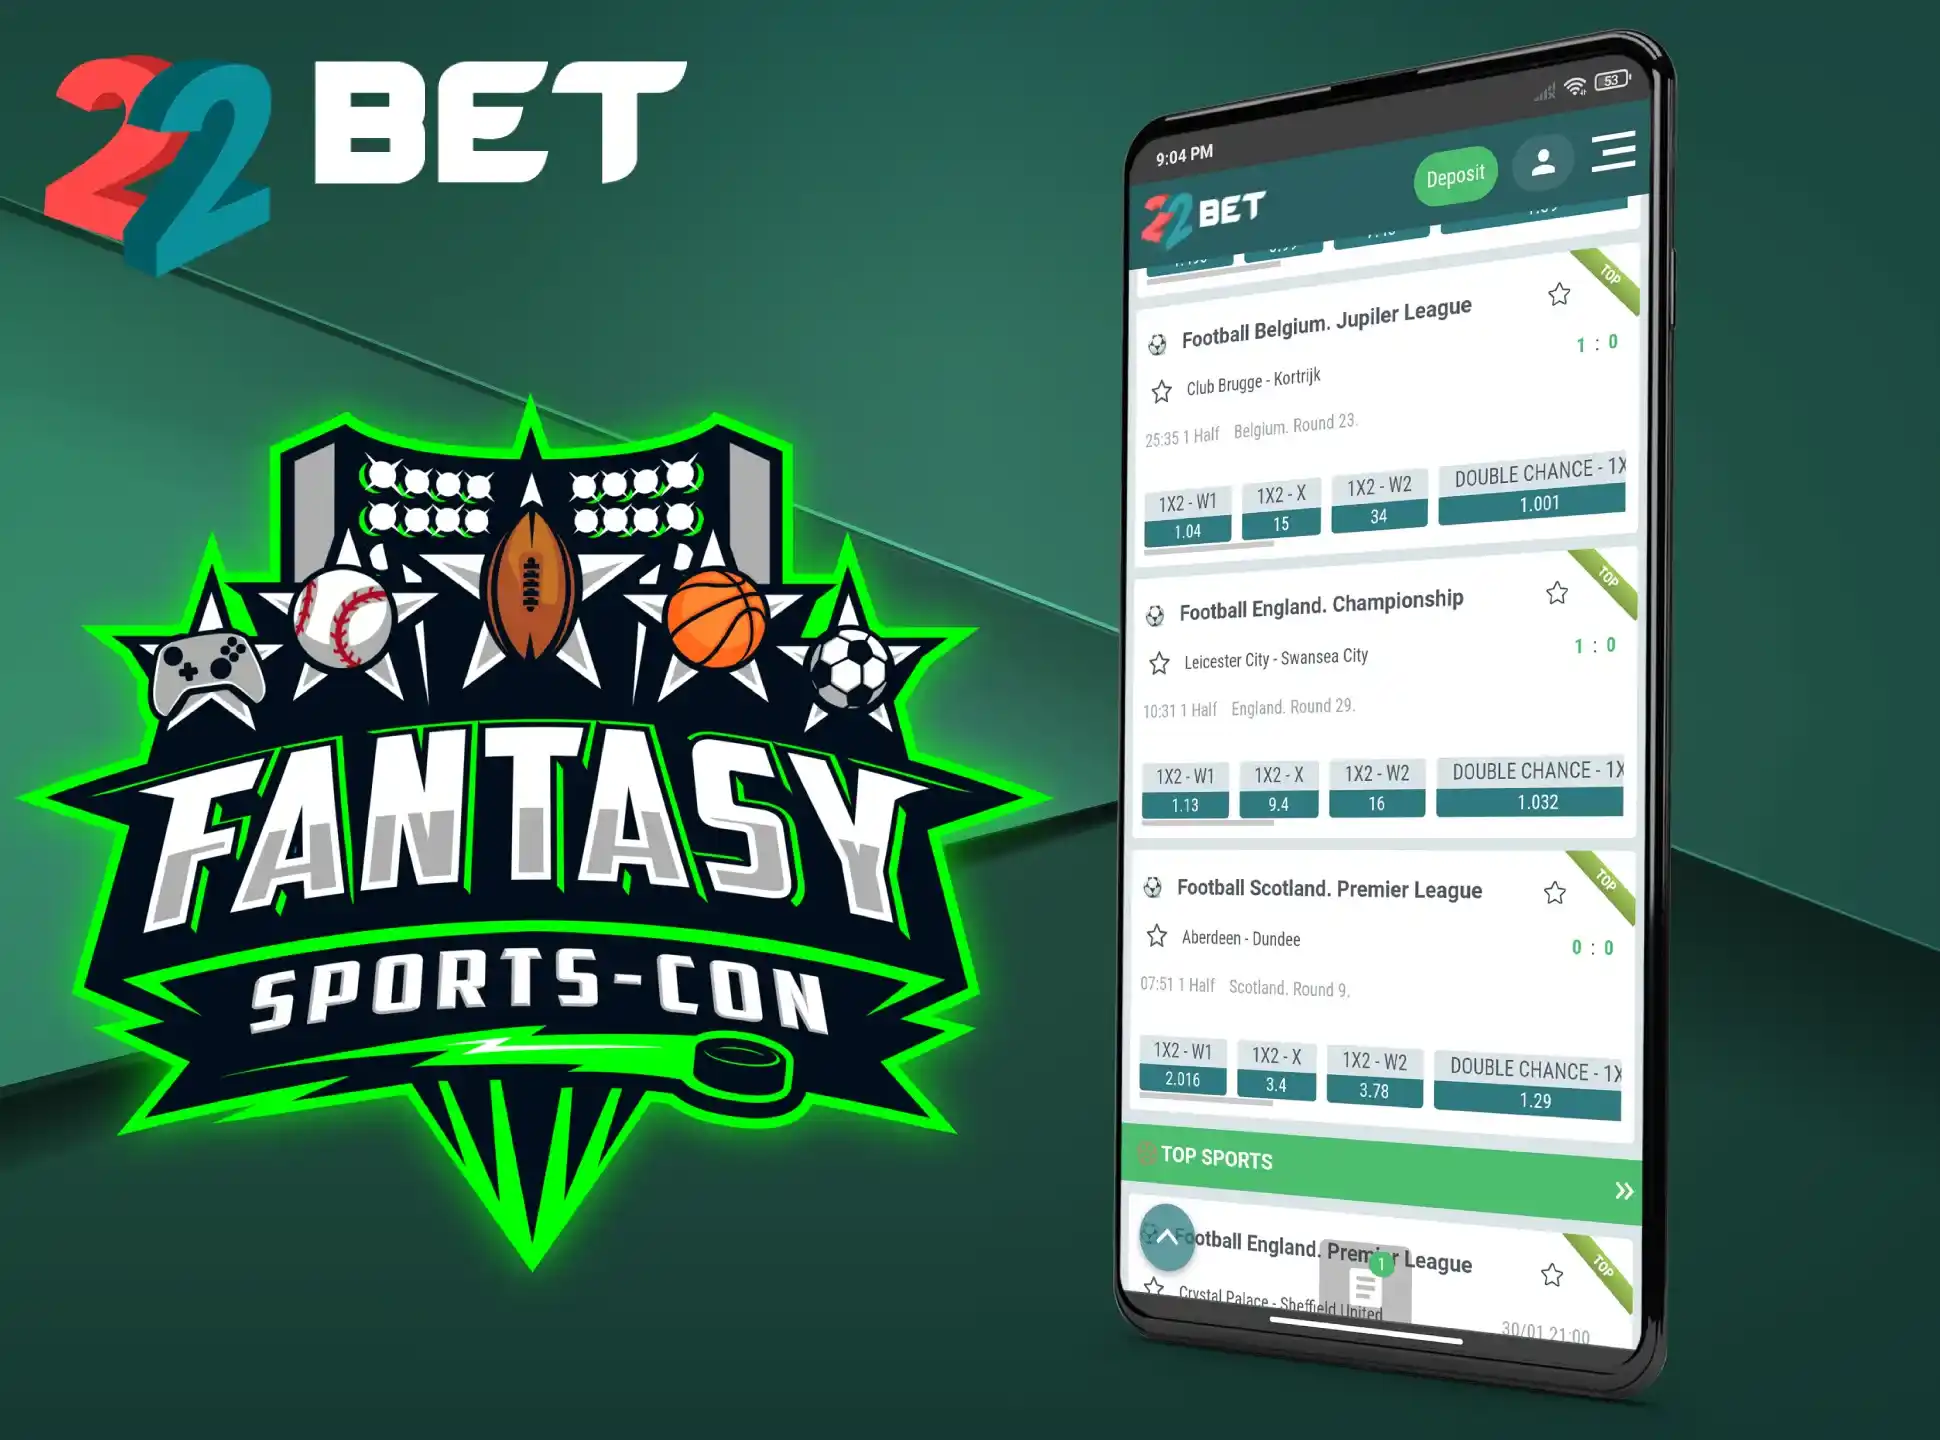 Fantasy sports betting includes football, cricket, basketball, baseball and tennis.